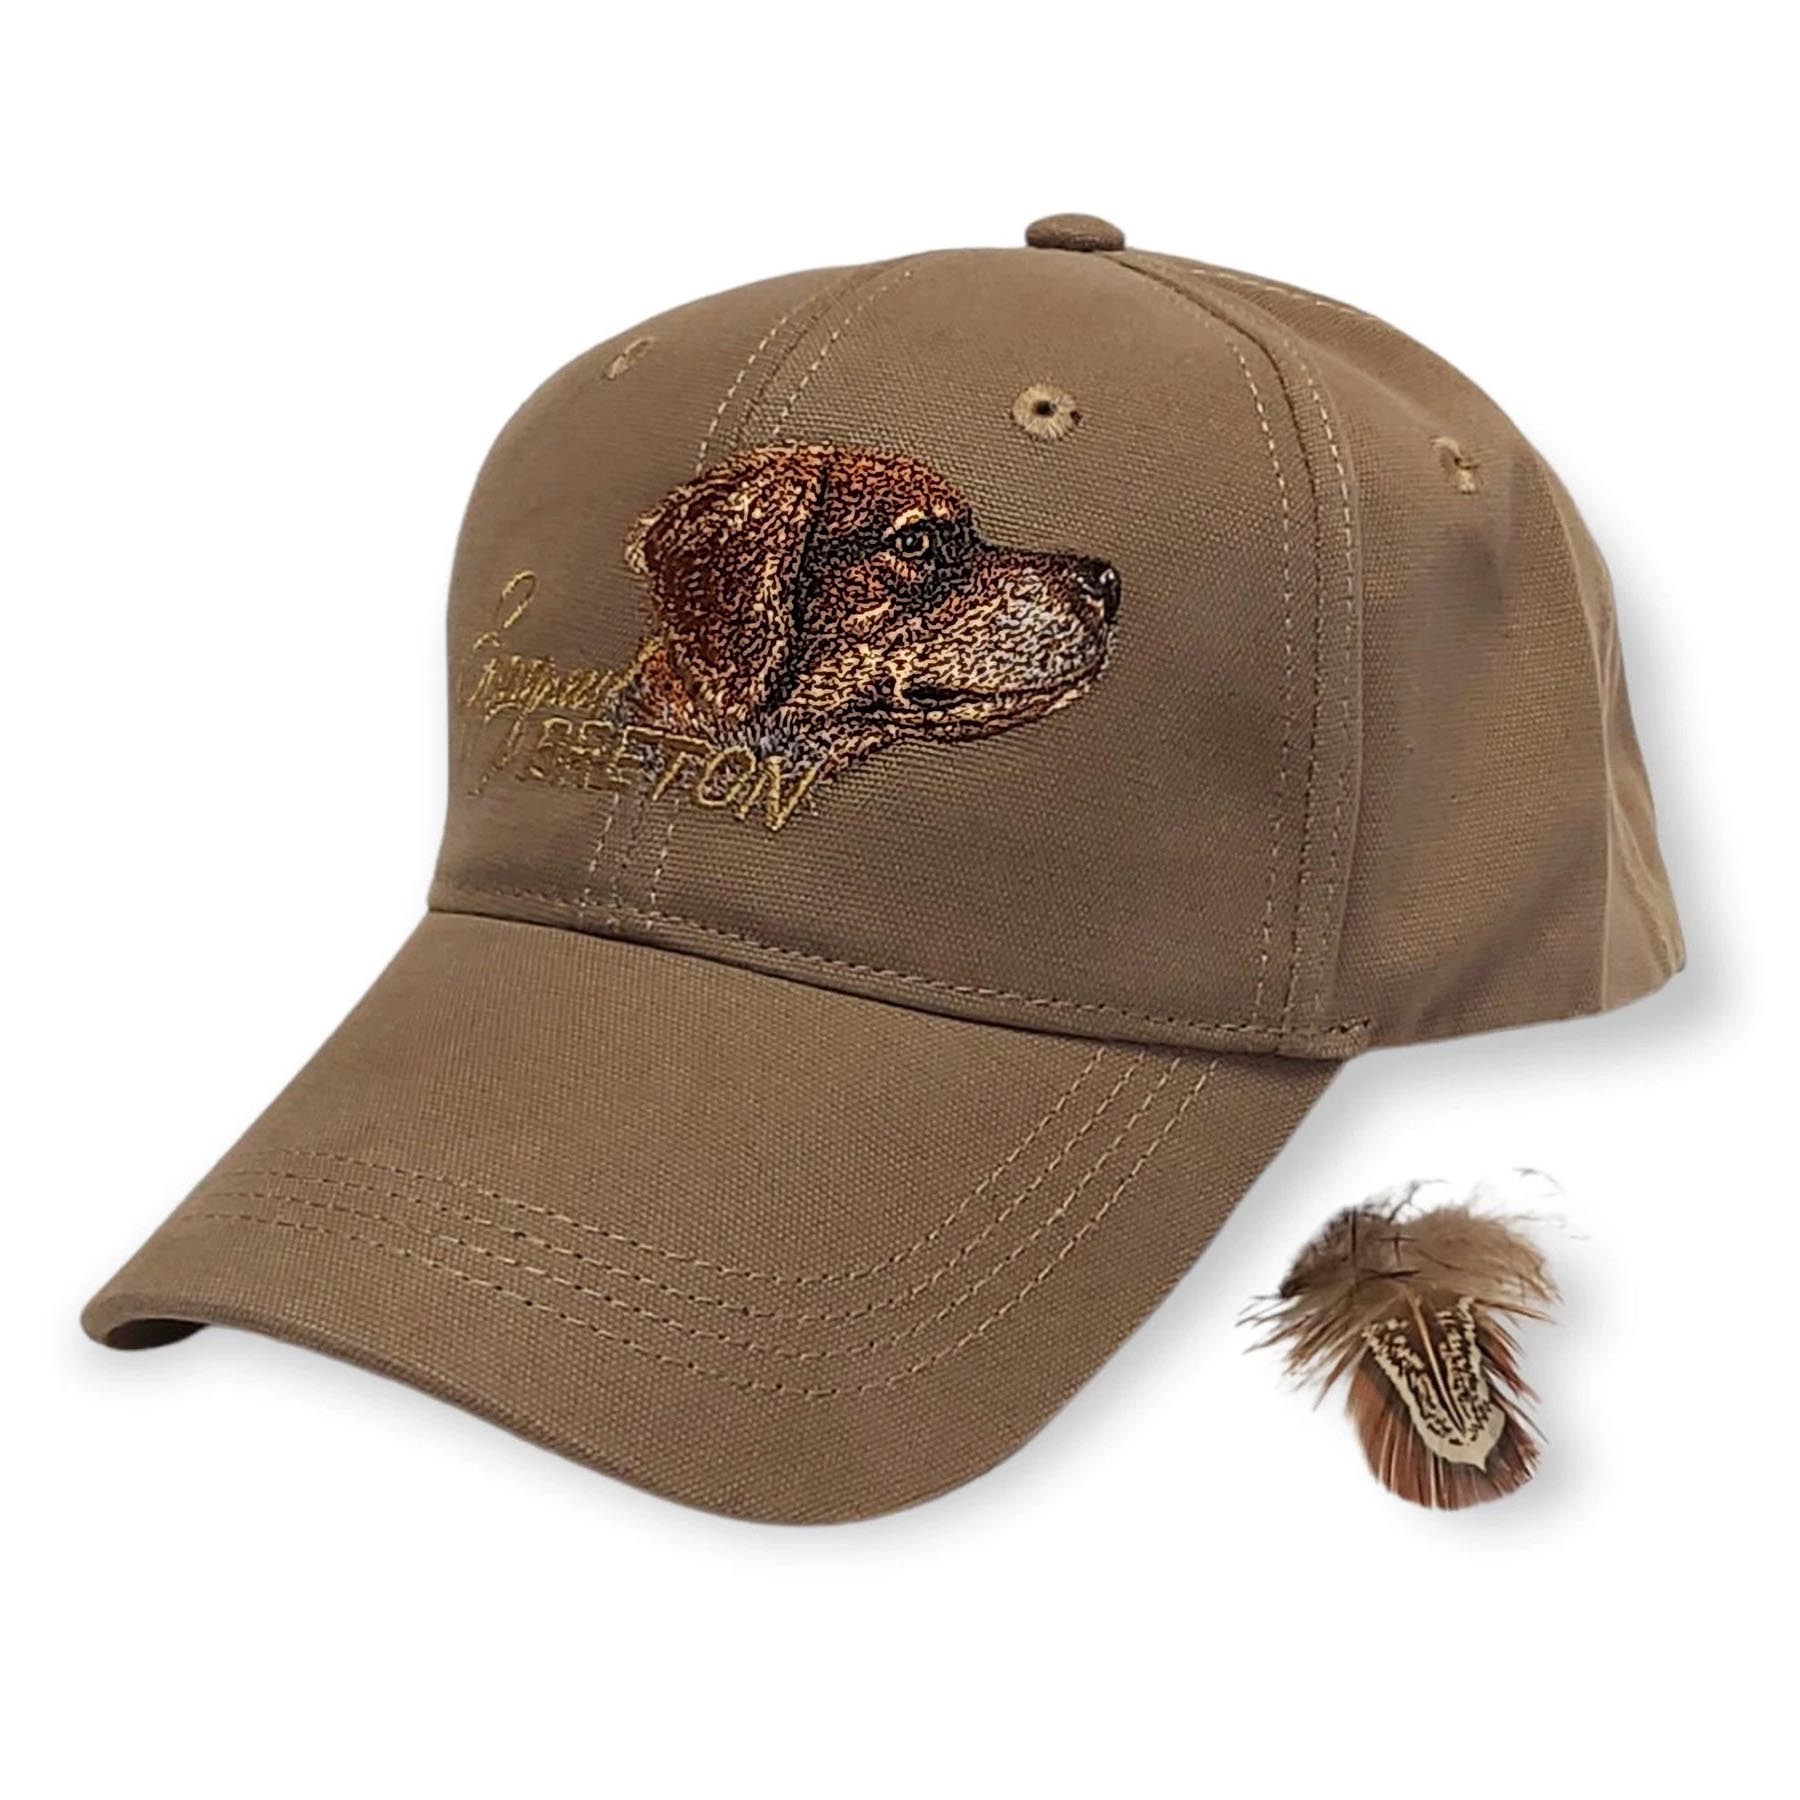 Hunter's cap 